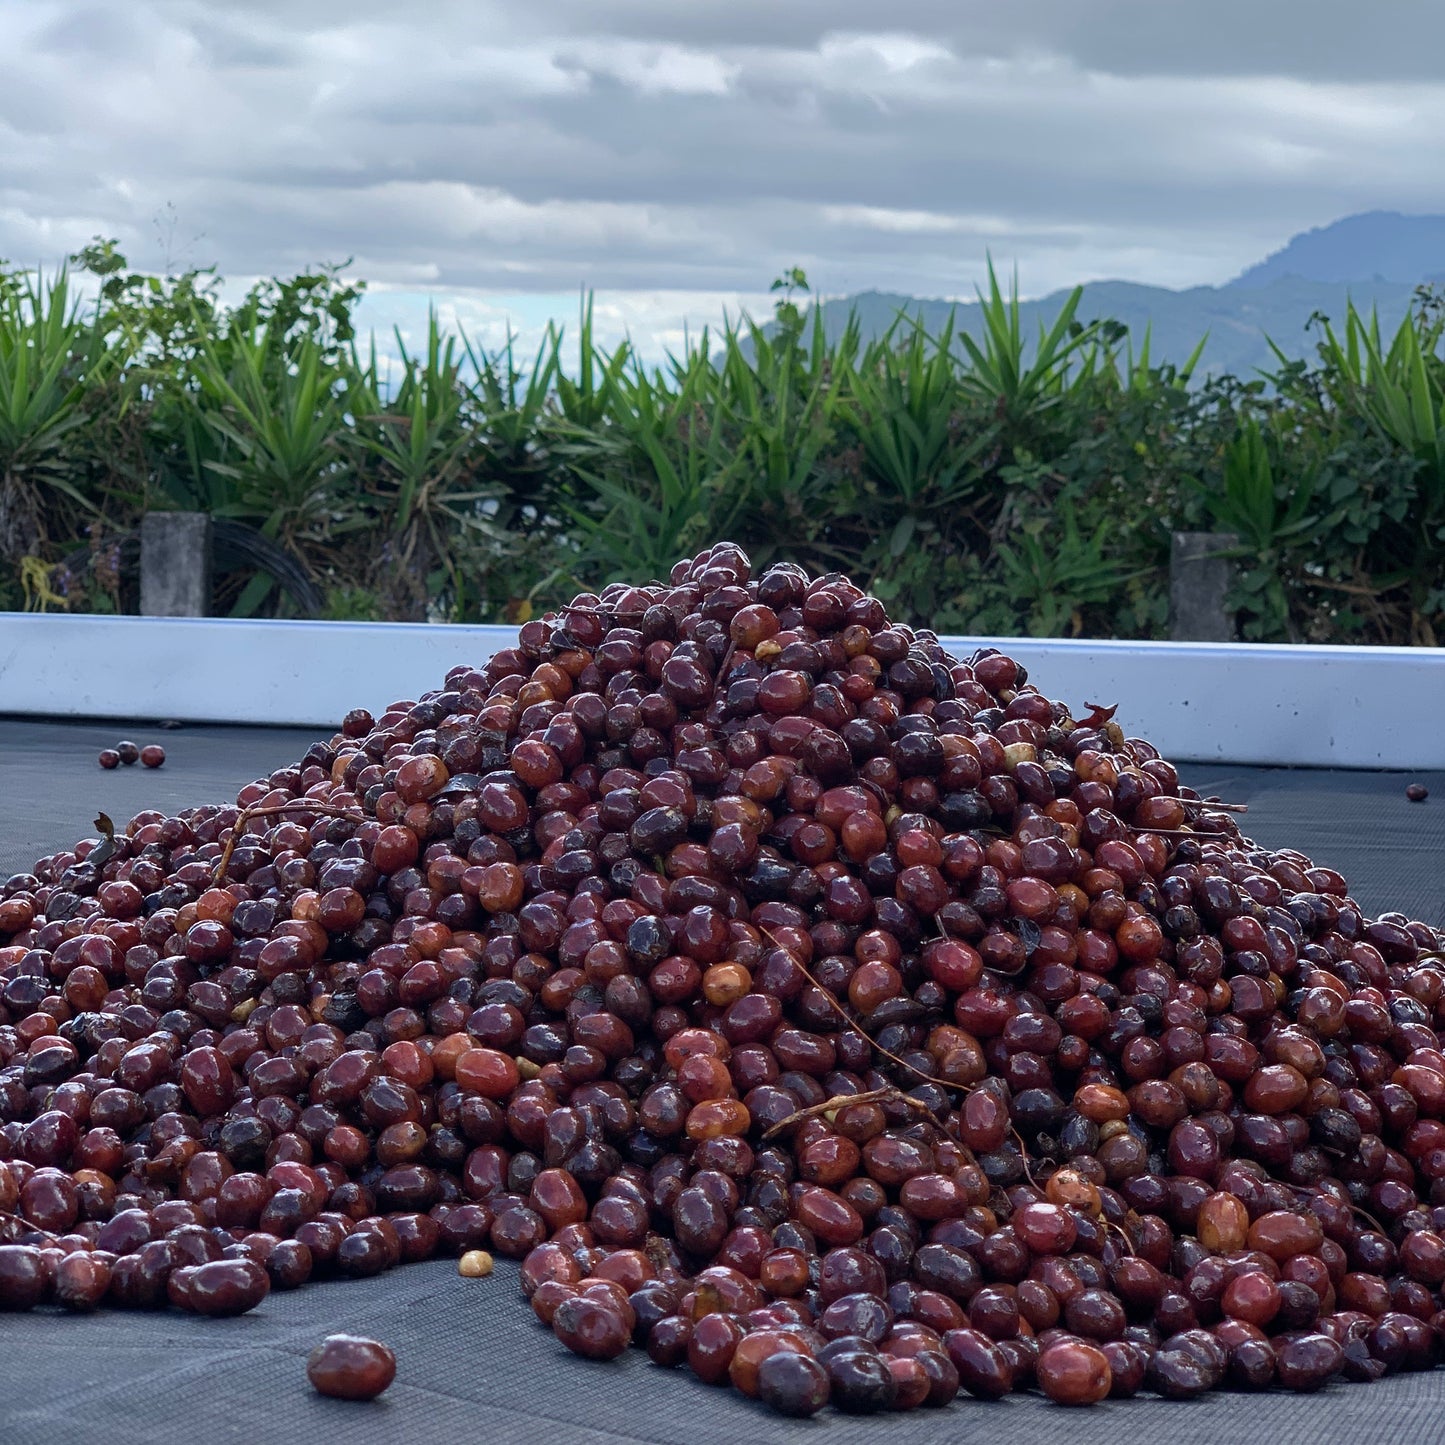 Coffee Cherries From El Salvador